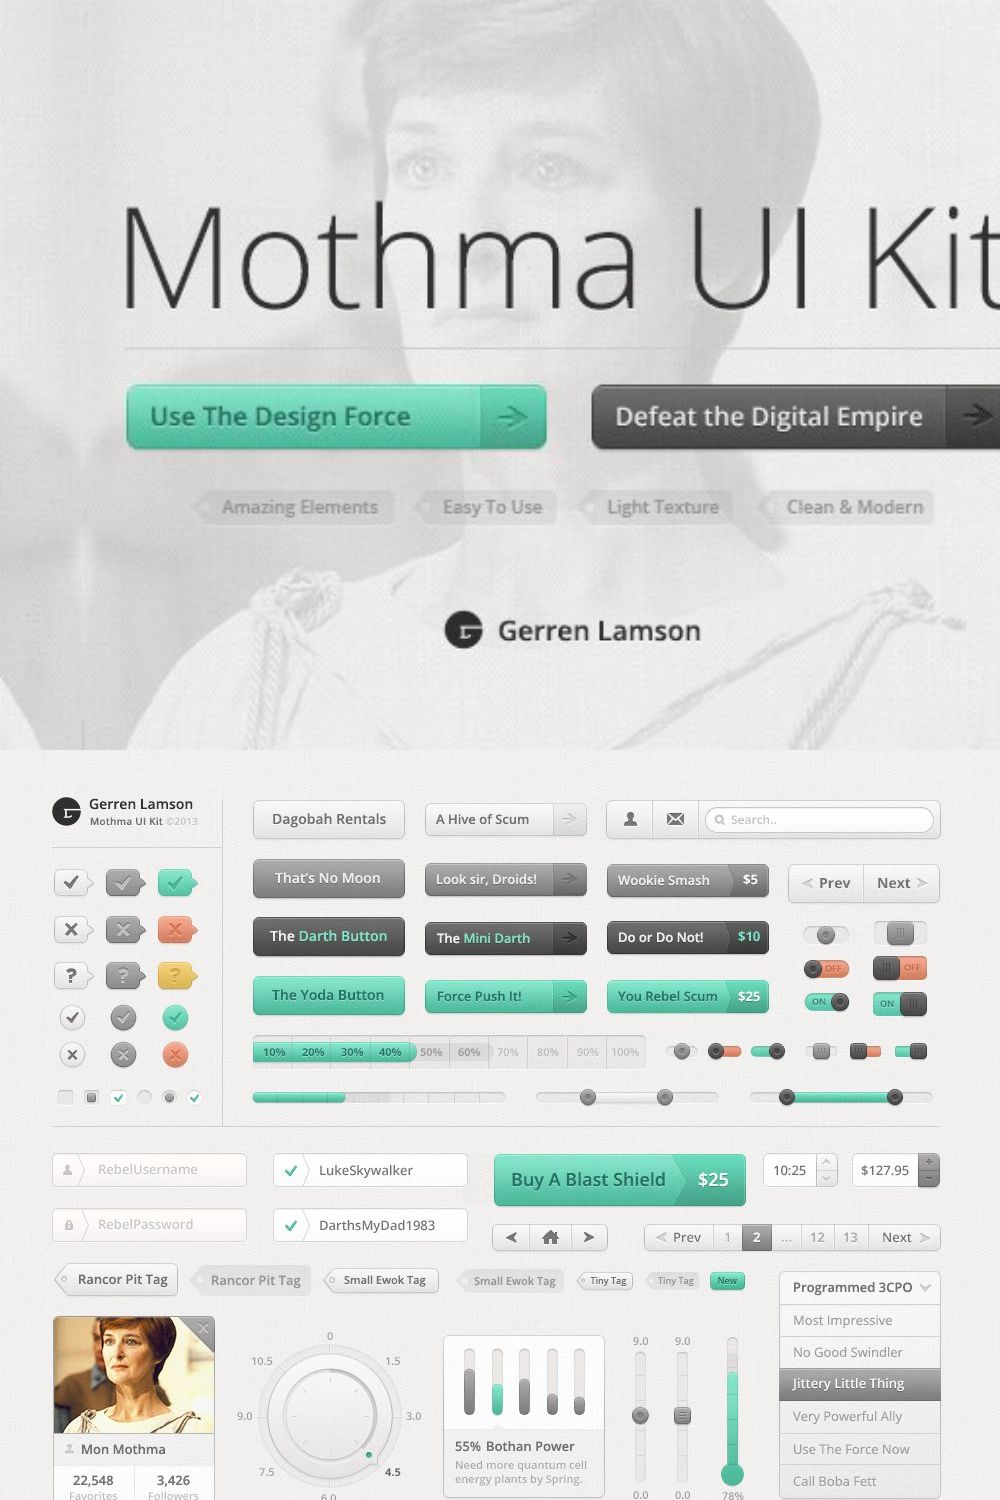 Mothma UI Kit pinterest preview image.